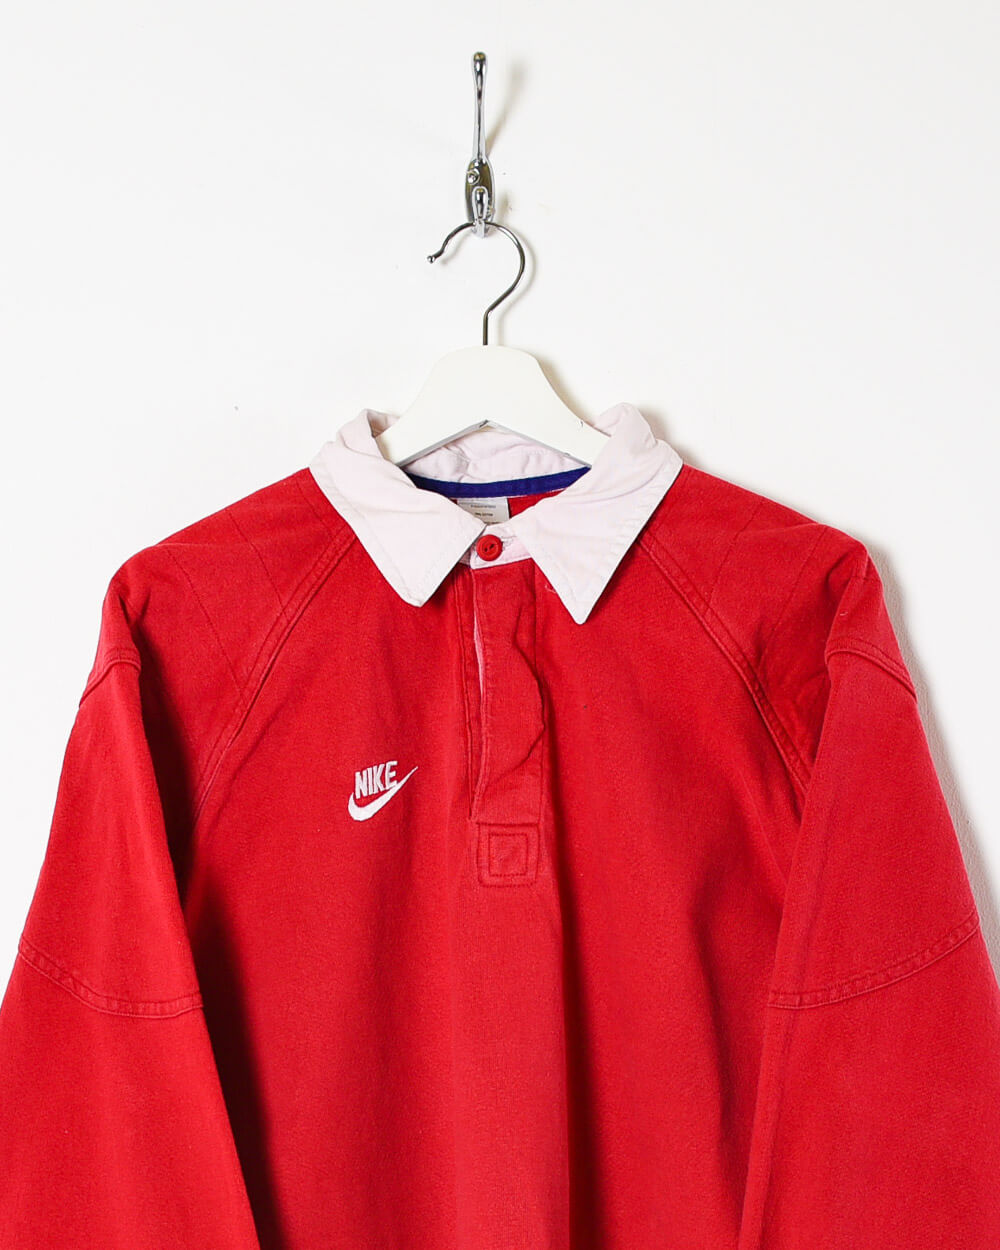 Red Nike Rugby Shirt - Medium